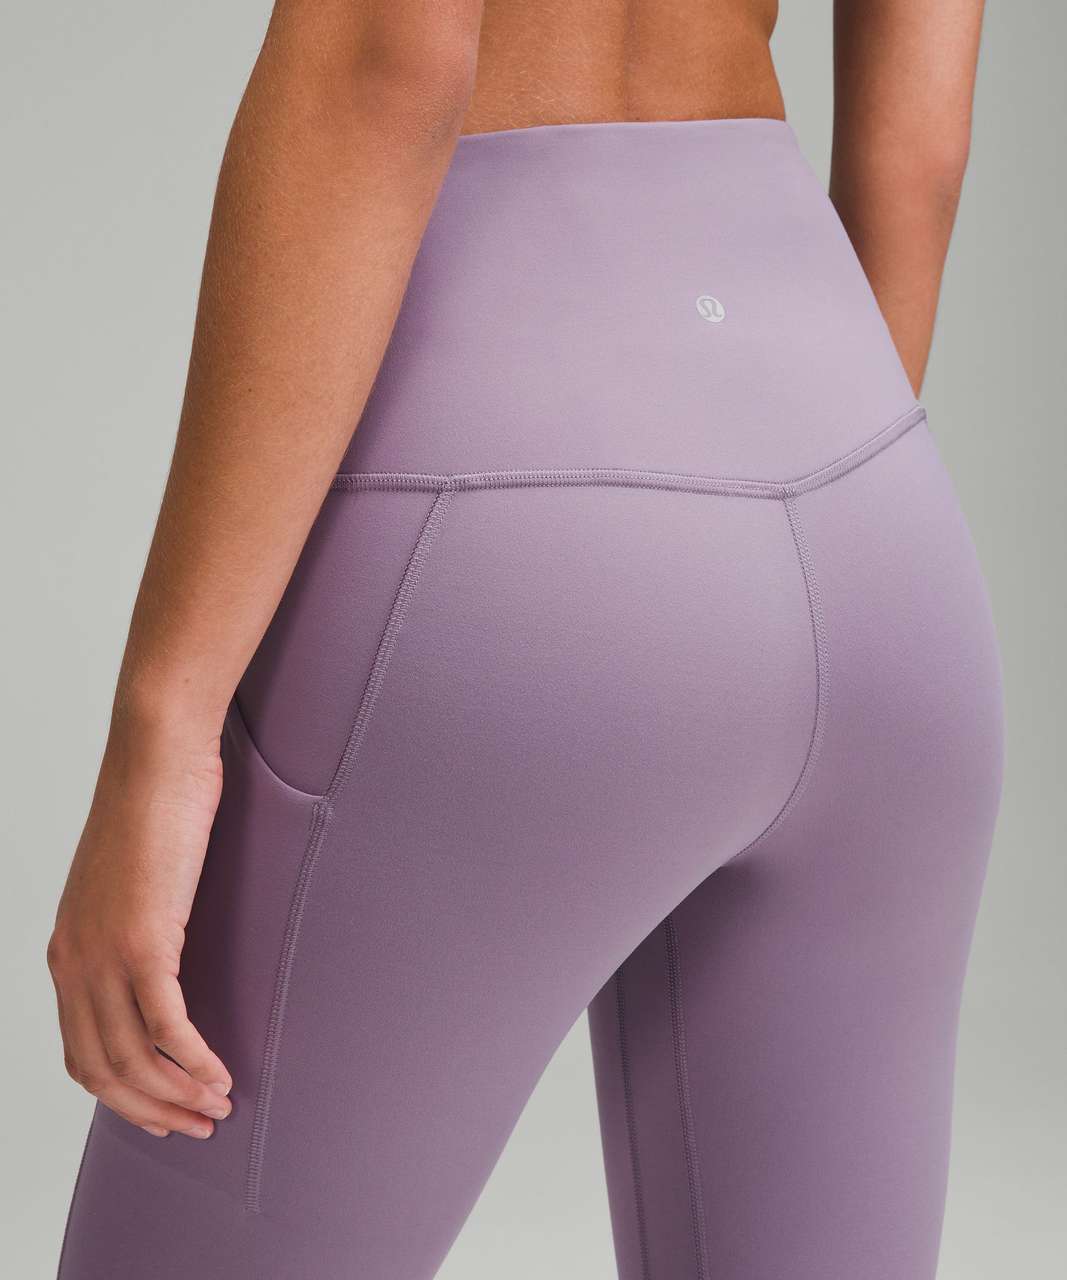 Lululemon Align High-Rise Pant with Pockets 25" - Purple Ash